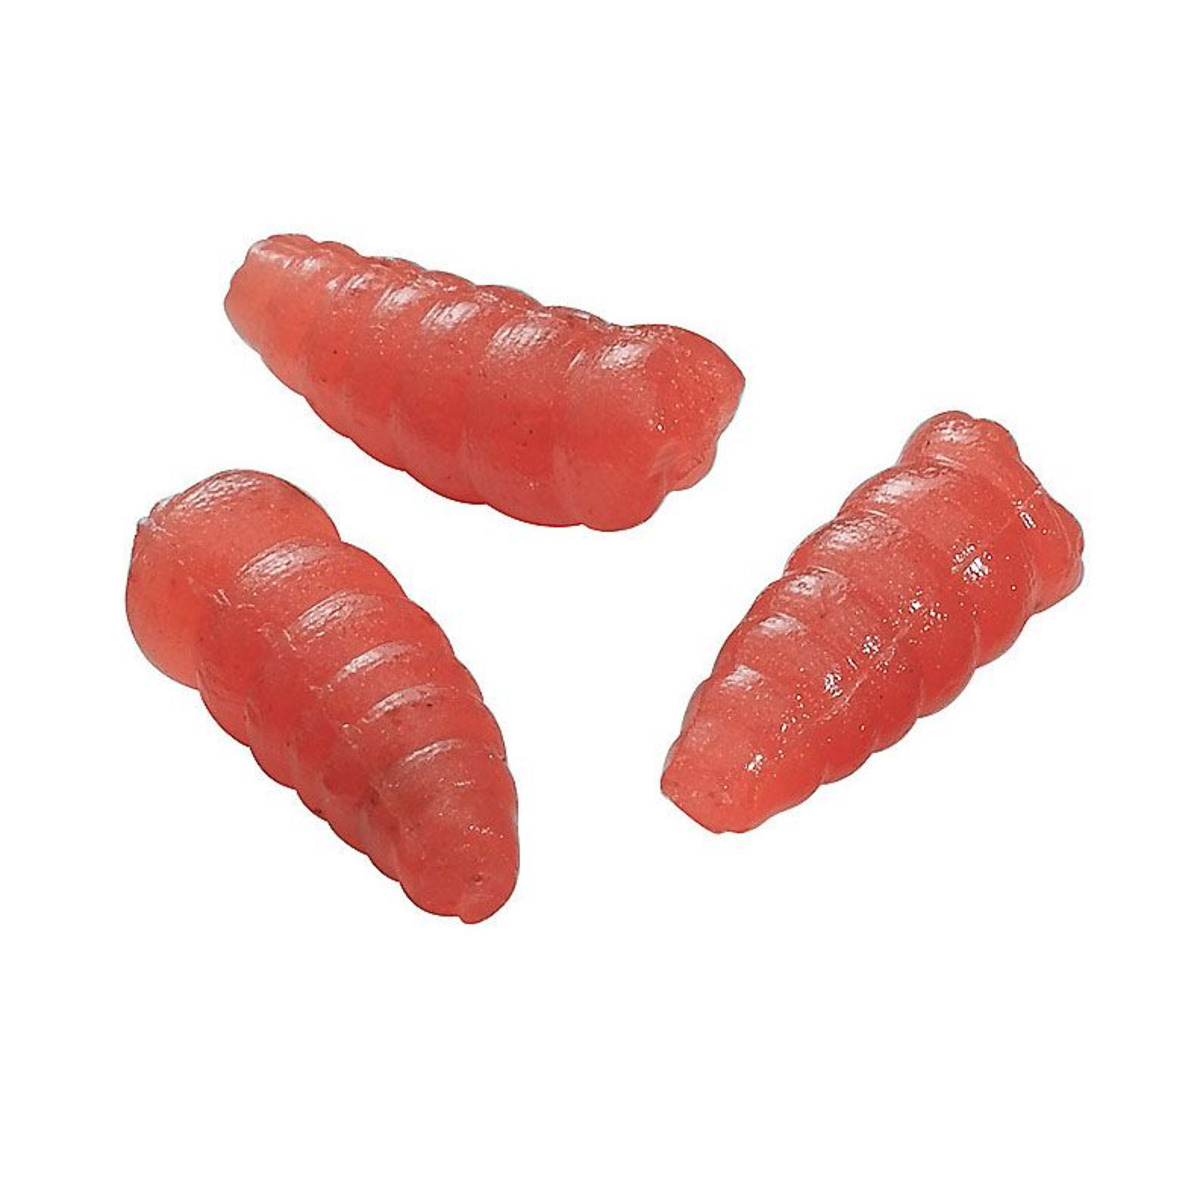 Berkley Powerbait Micro Power Maggots - Red